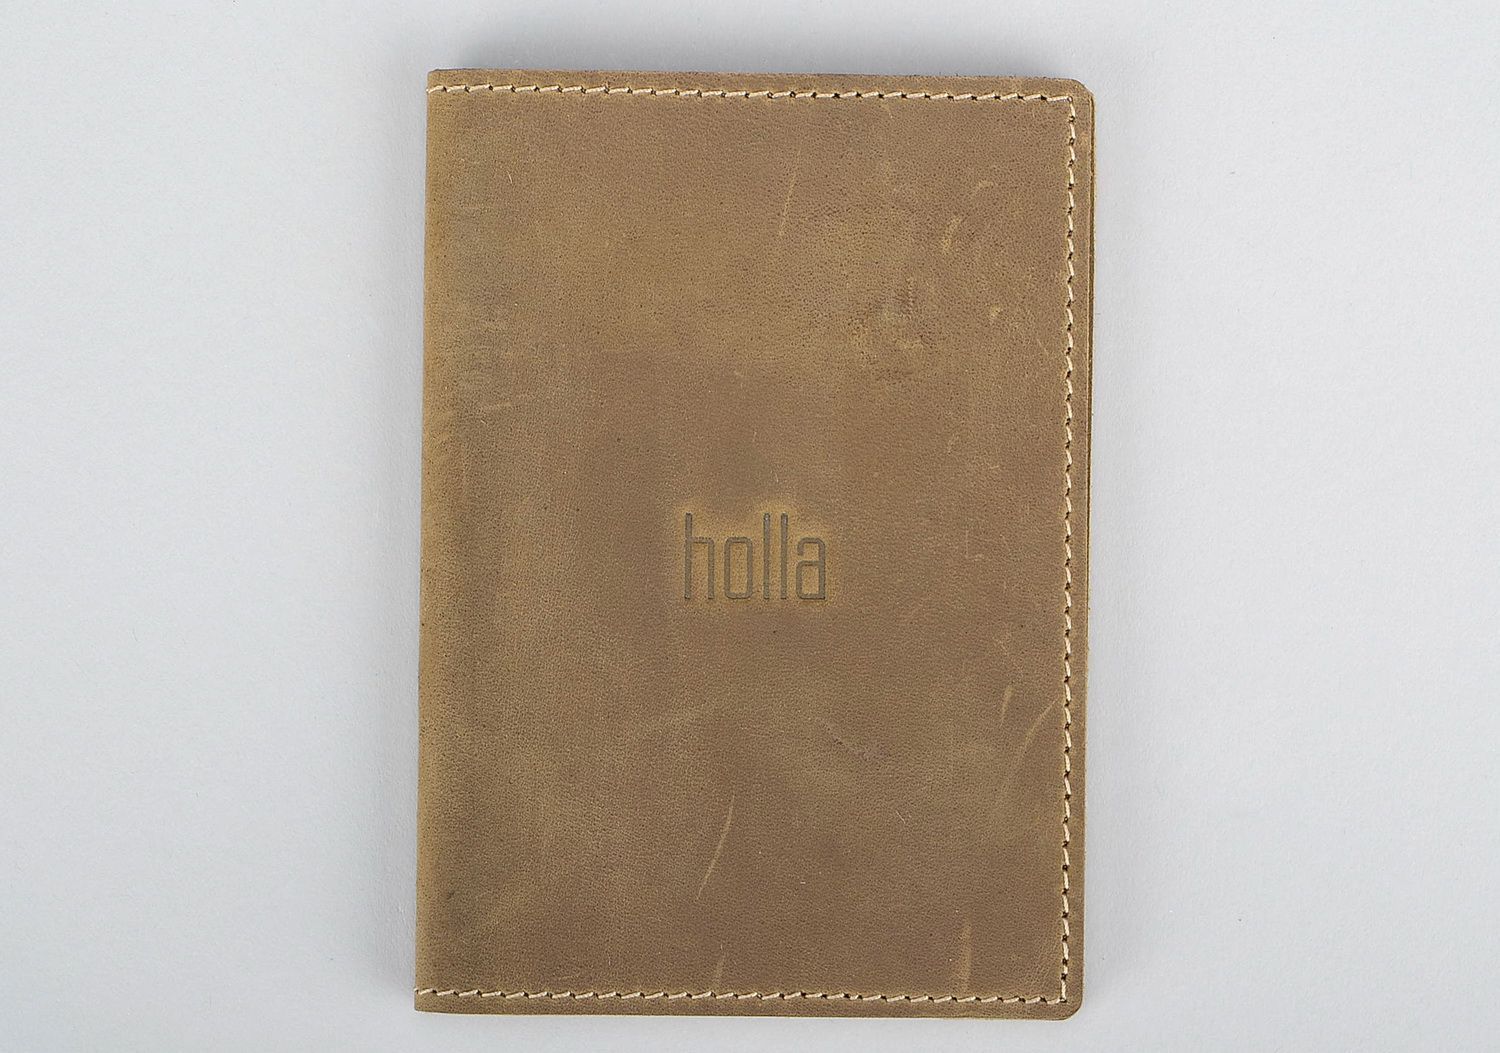 Porte-passeport en cuir beige photo 1